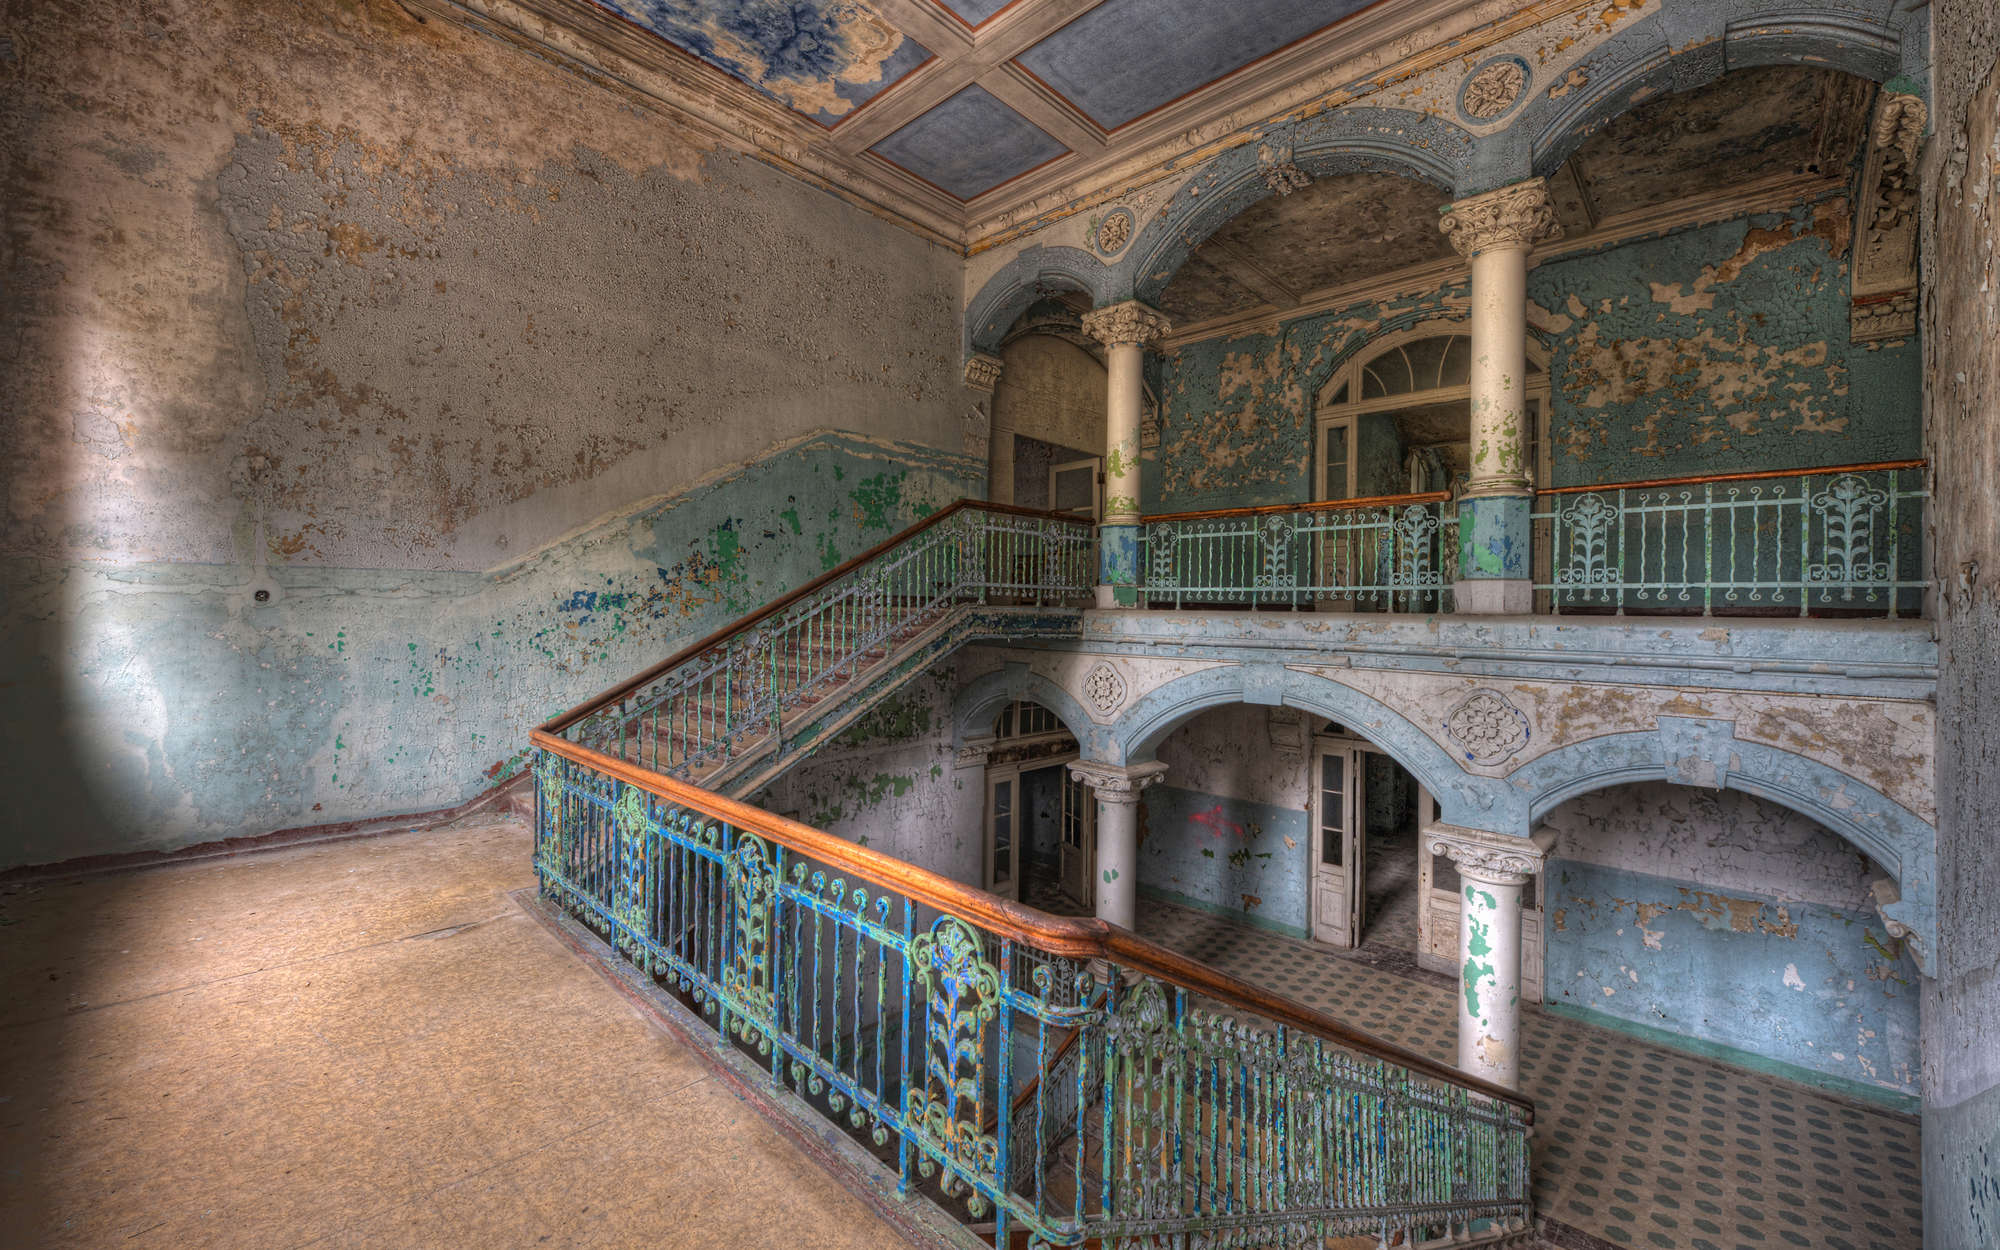             Fototapete Treppen in leerem Haus – Mattes Glattvlies
        